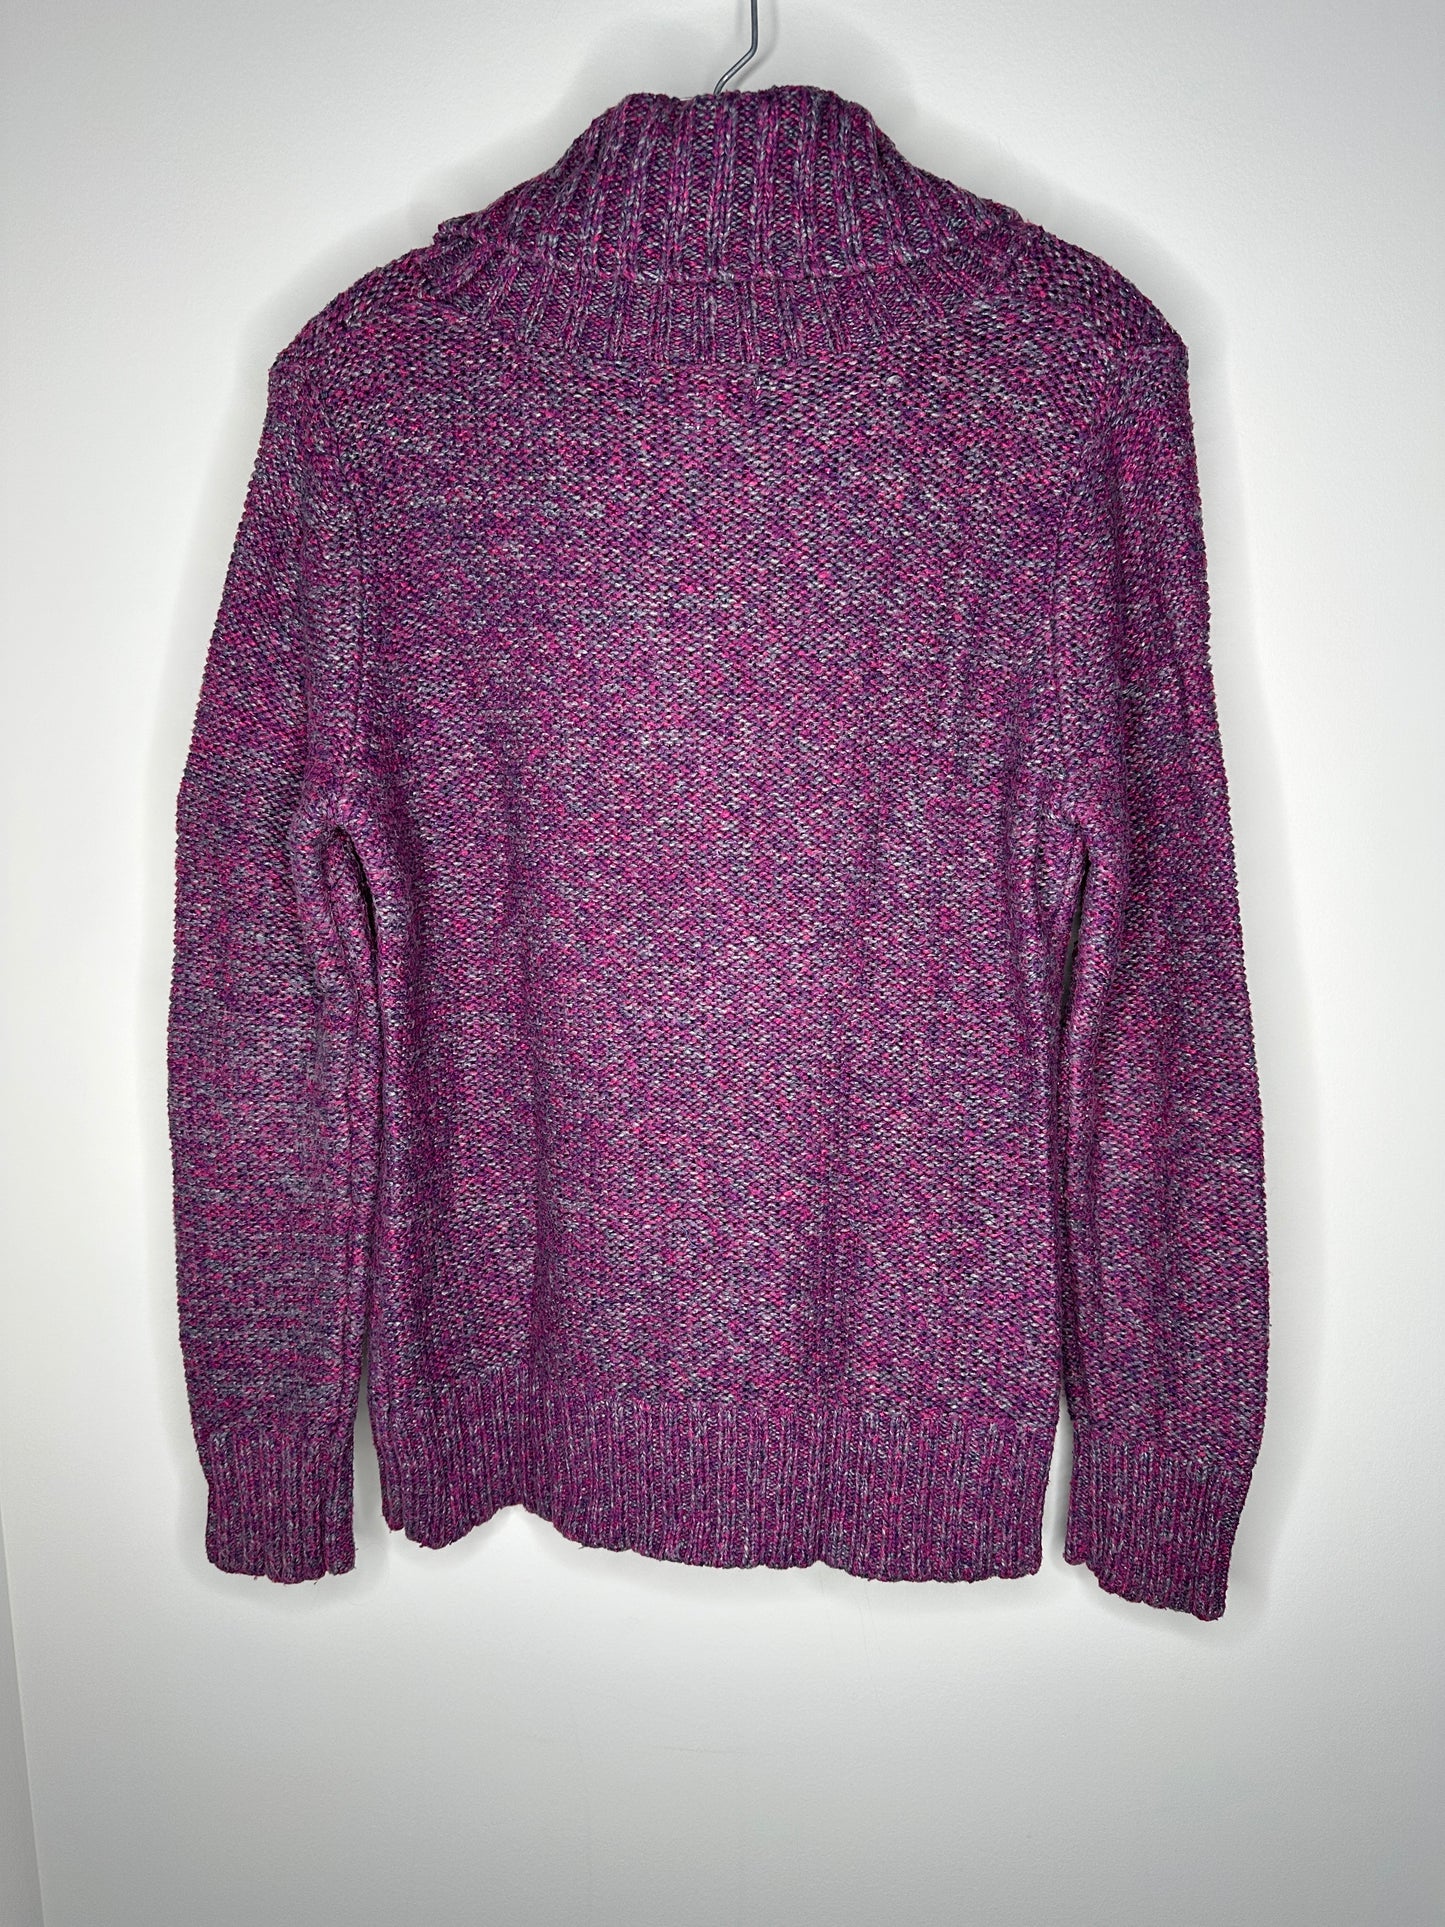 Merona Size L Pink & Gray Cowl Neck Sweater